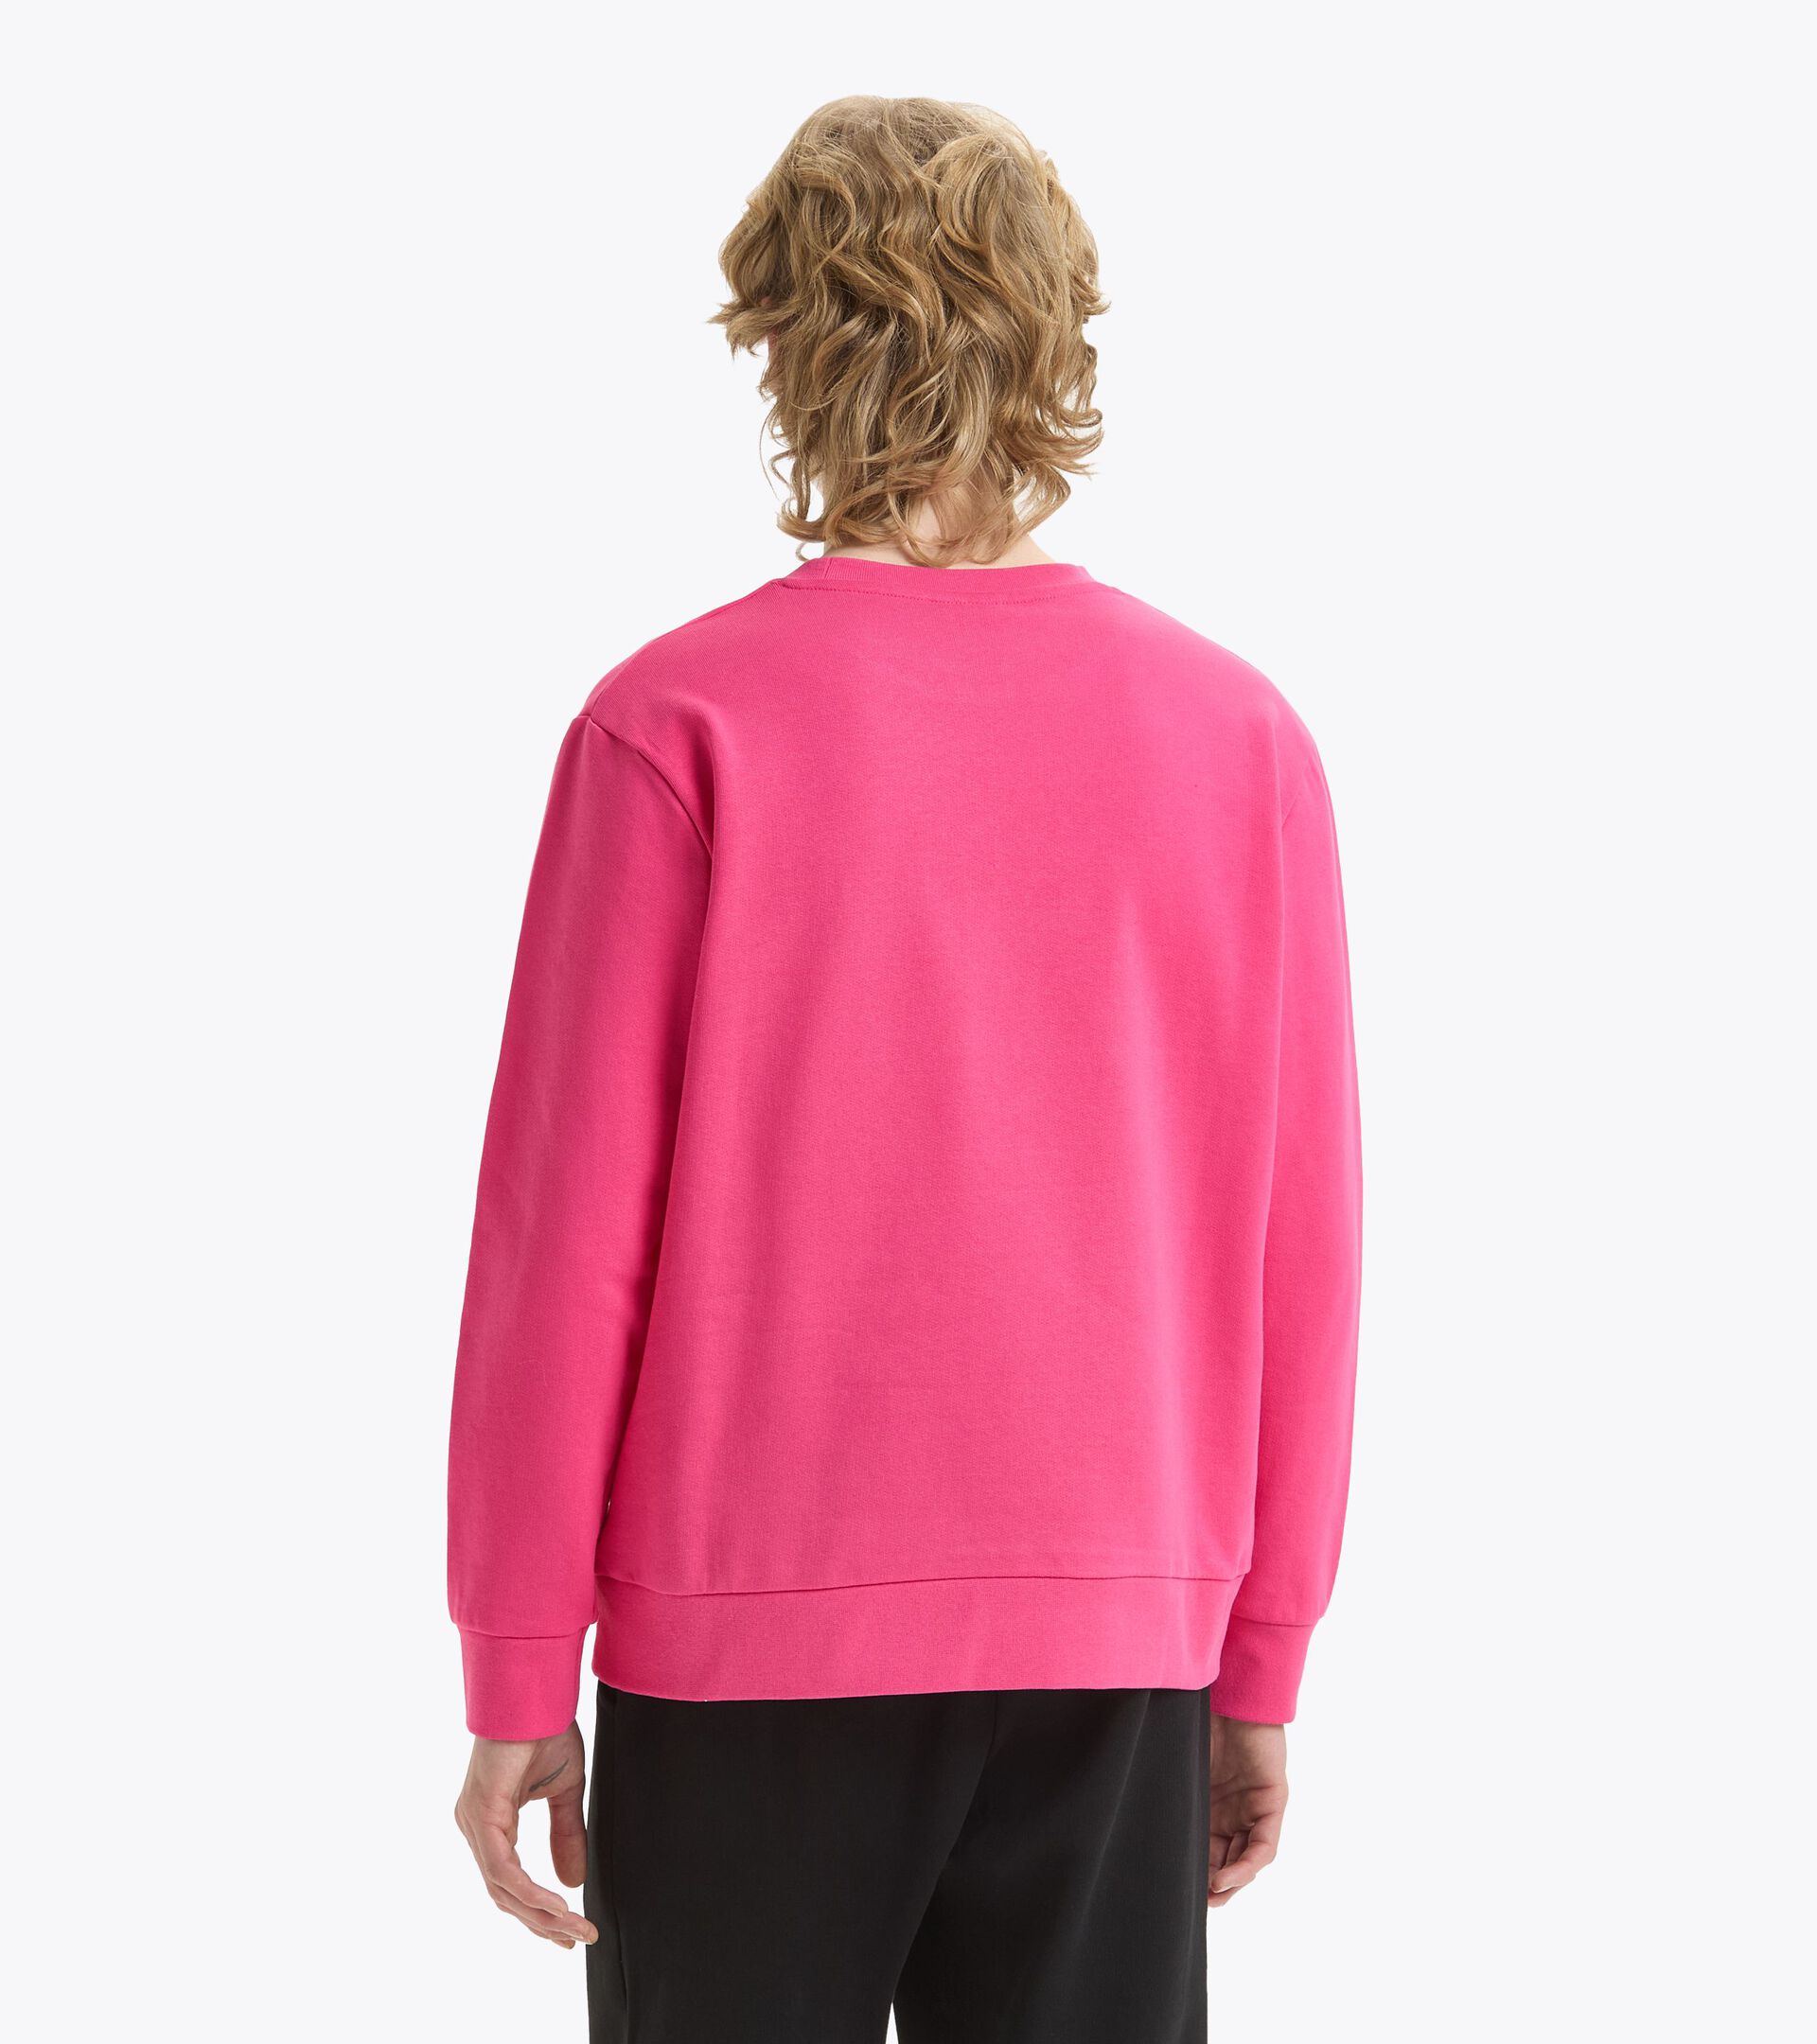 Sportliches Sweatshirt - Made in Italy - Gender Neutral SWEATSHIRT CREW LOGO HIMBEERE SORBET - Diadora